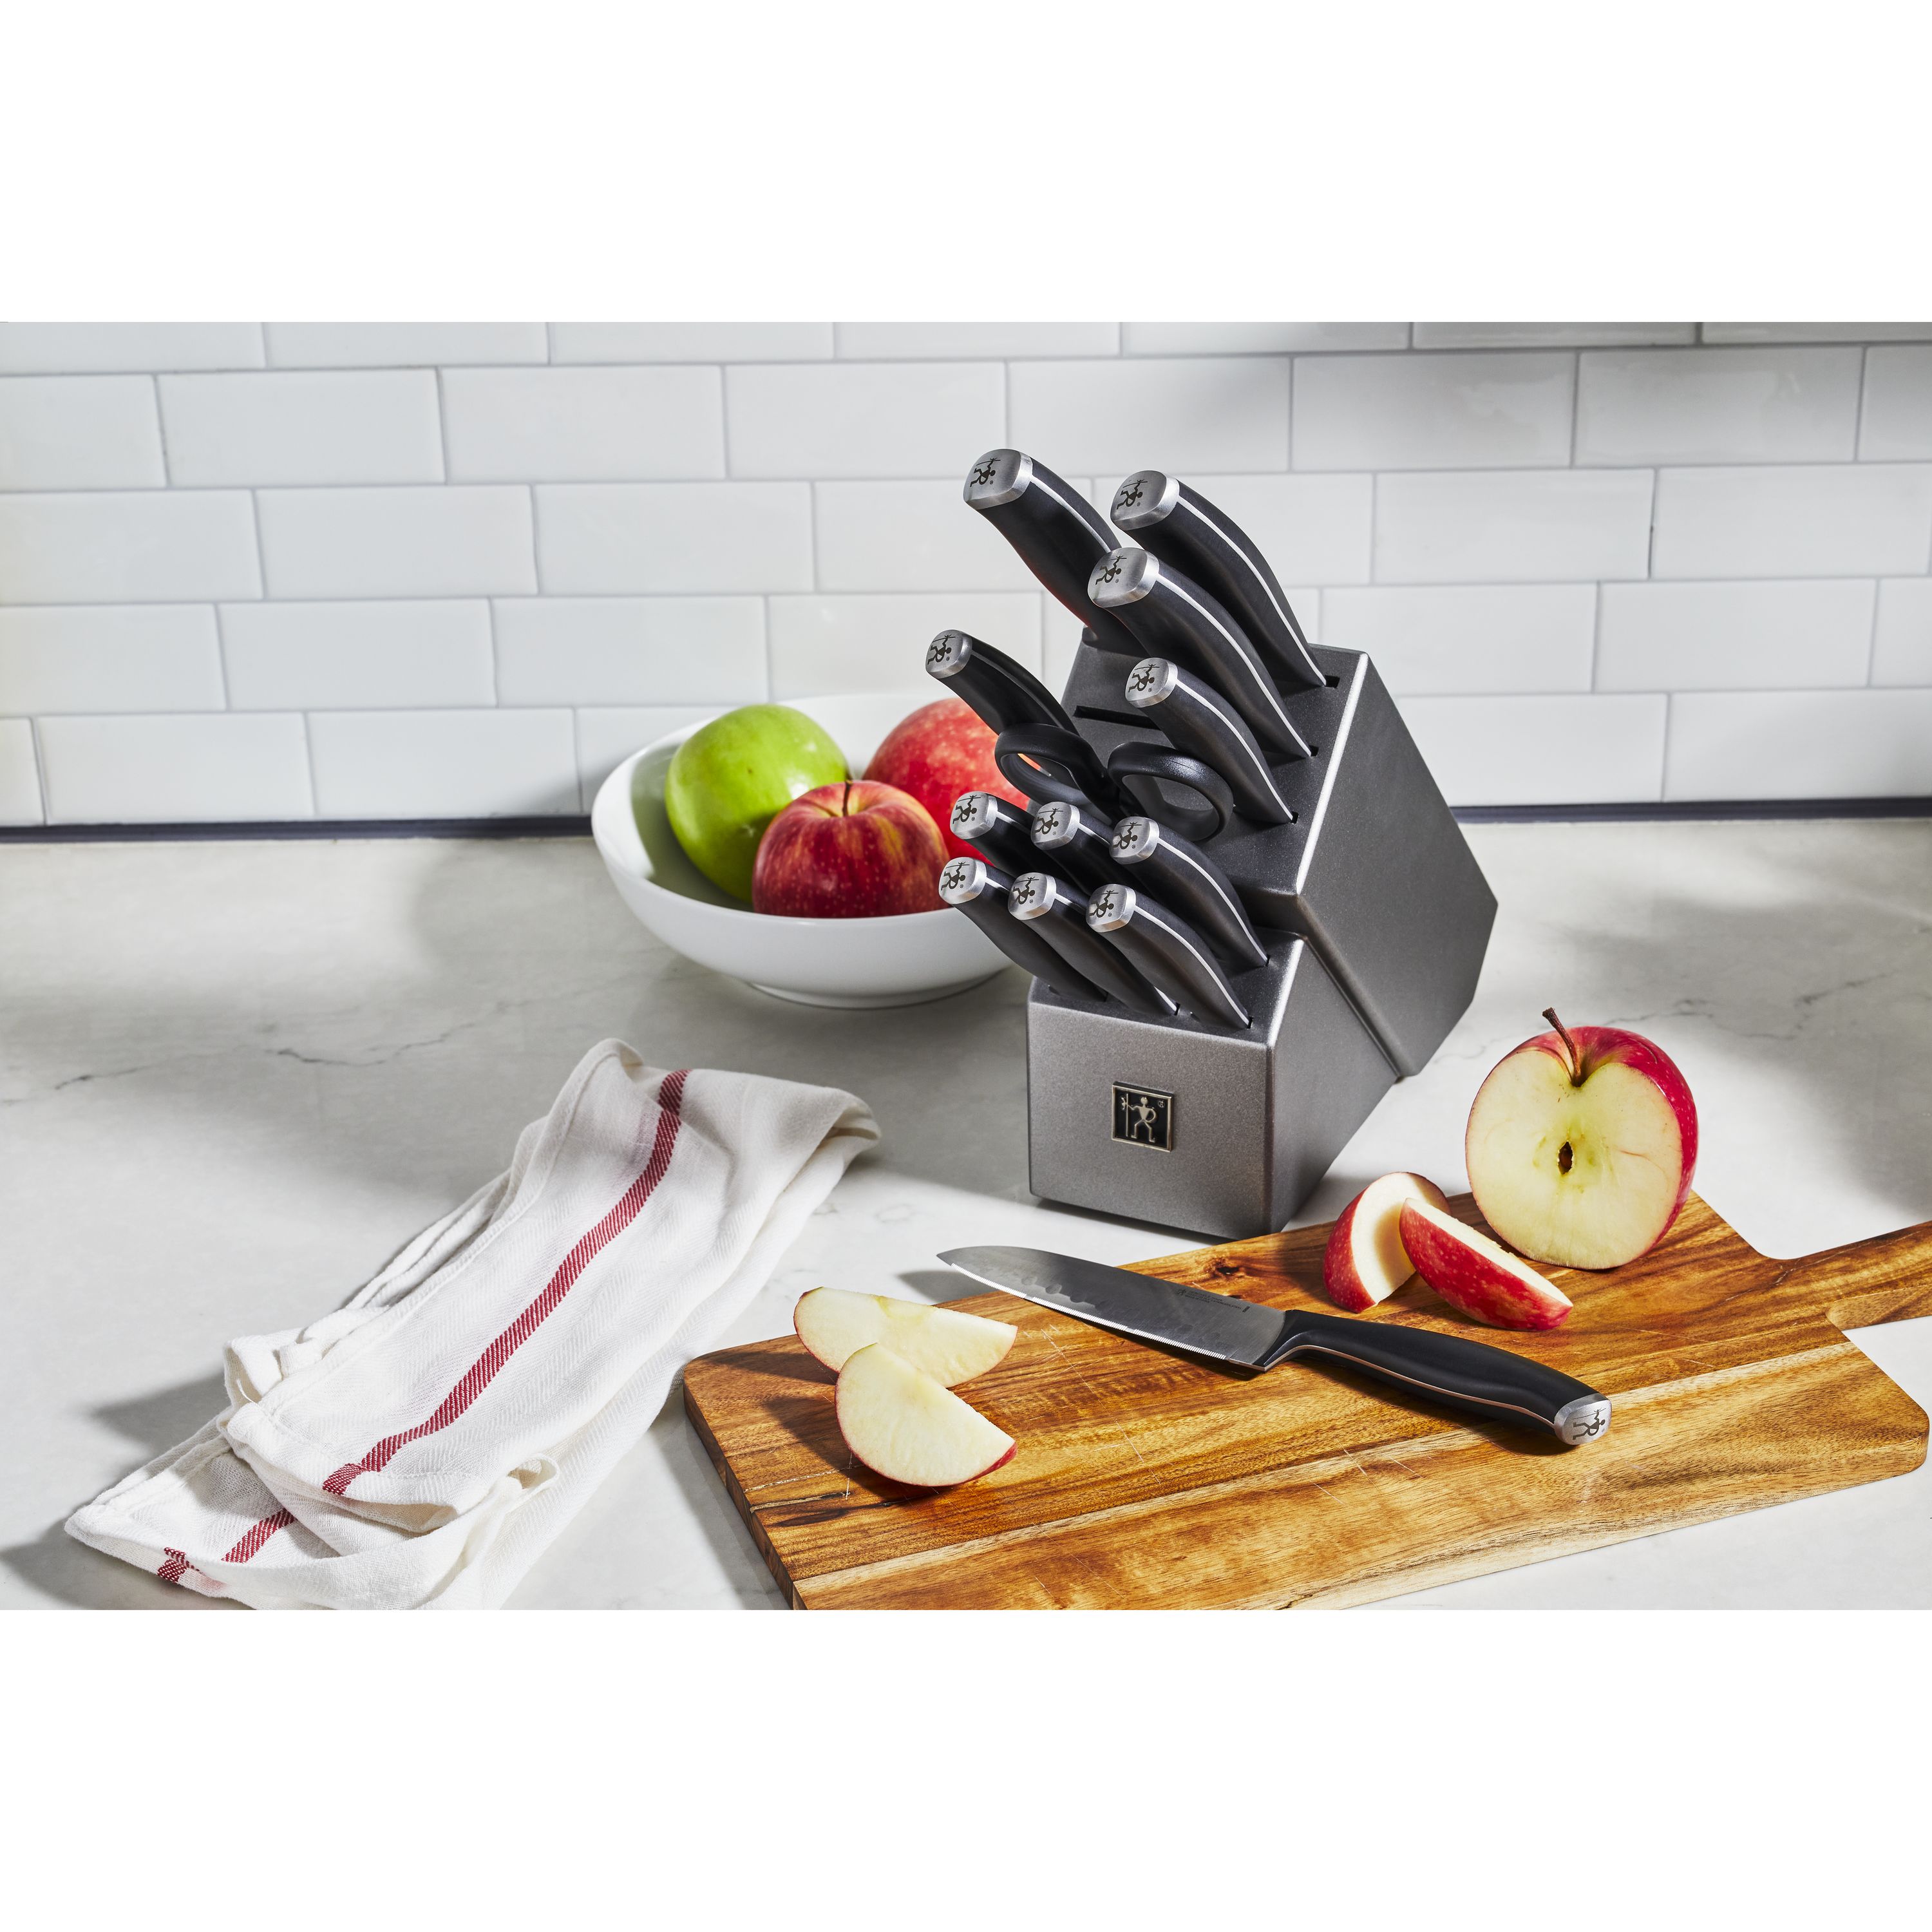  HENCKELS Graphite 20-pc Self-Sharpening Knife Set with Block,  Chef Knife, Paring Knife, Utility Knife, Bread Knife, Steak Knife, Black,  Stainless Steel : Everything Else